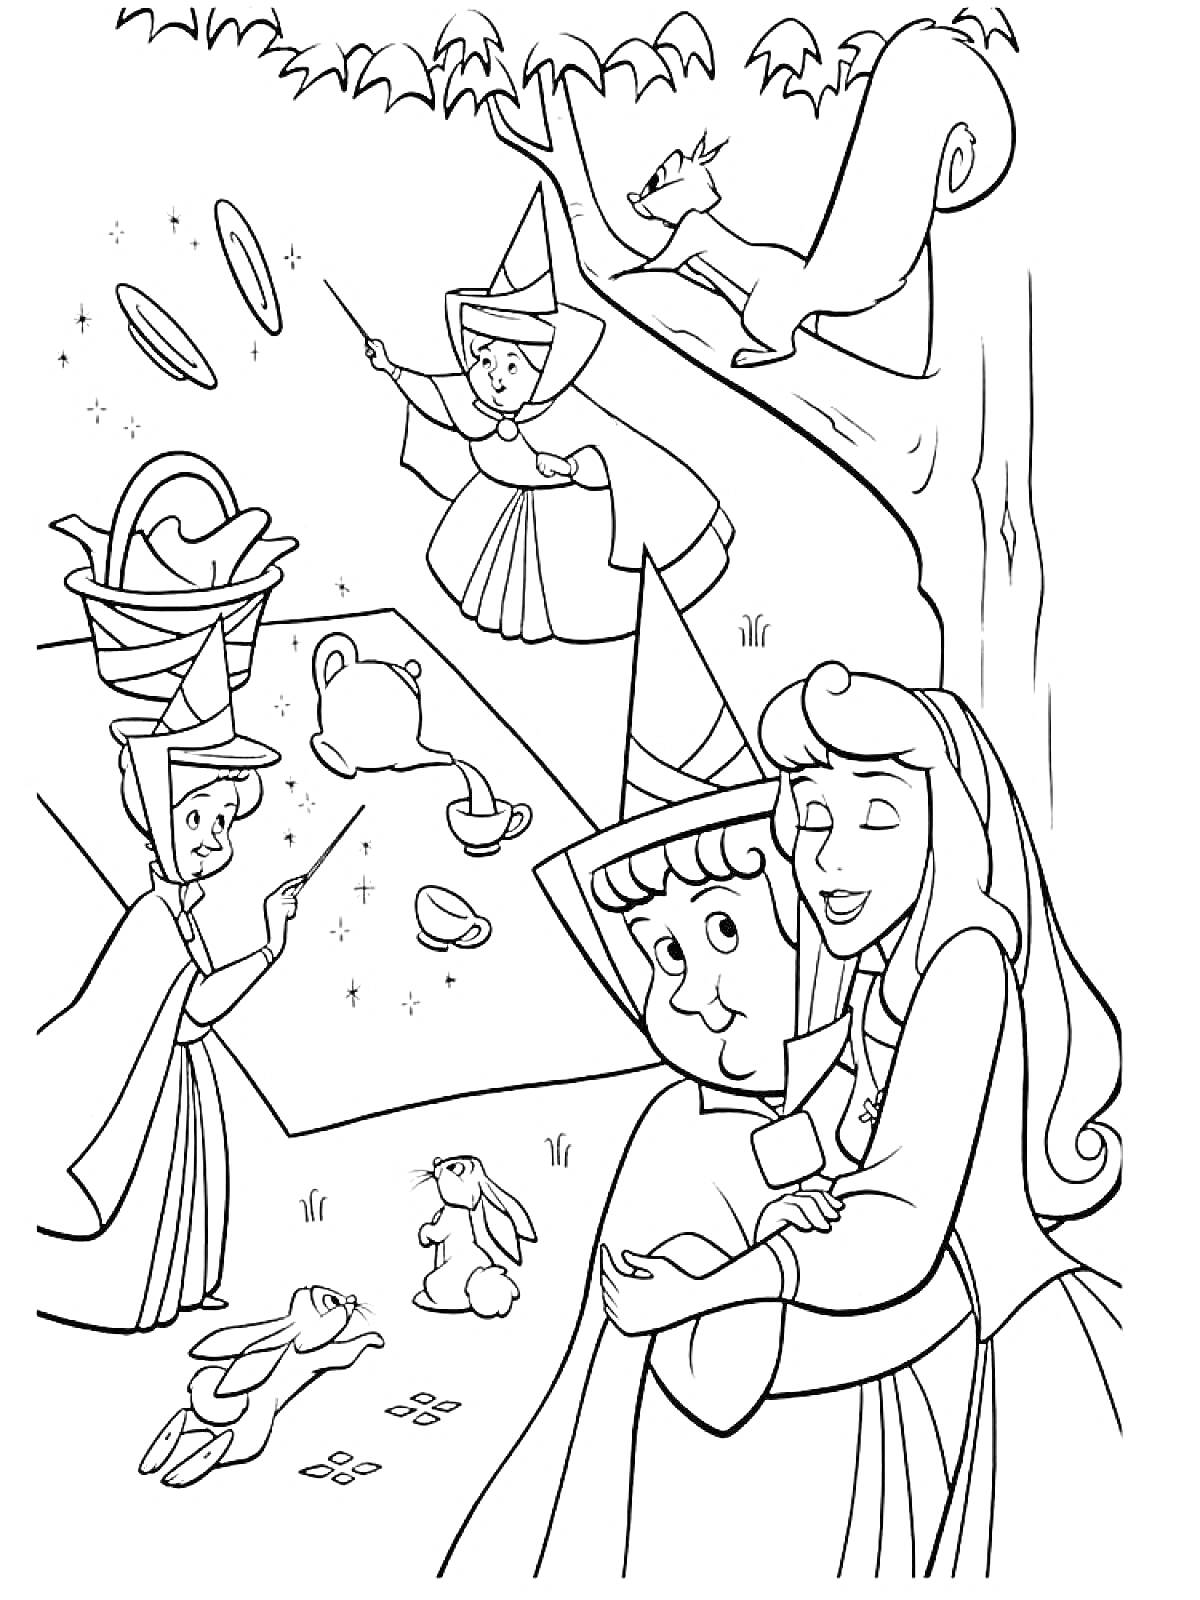 На раскраске изображено: Спящая красавица, Принцесса, Пикник, Белка, Лес, Объятия, Магия, Зайцы